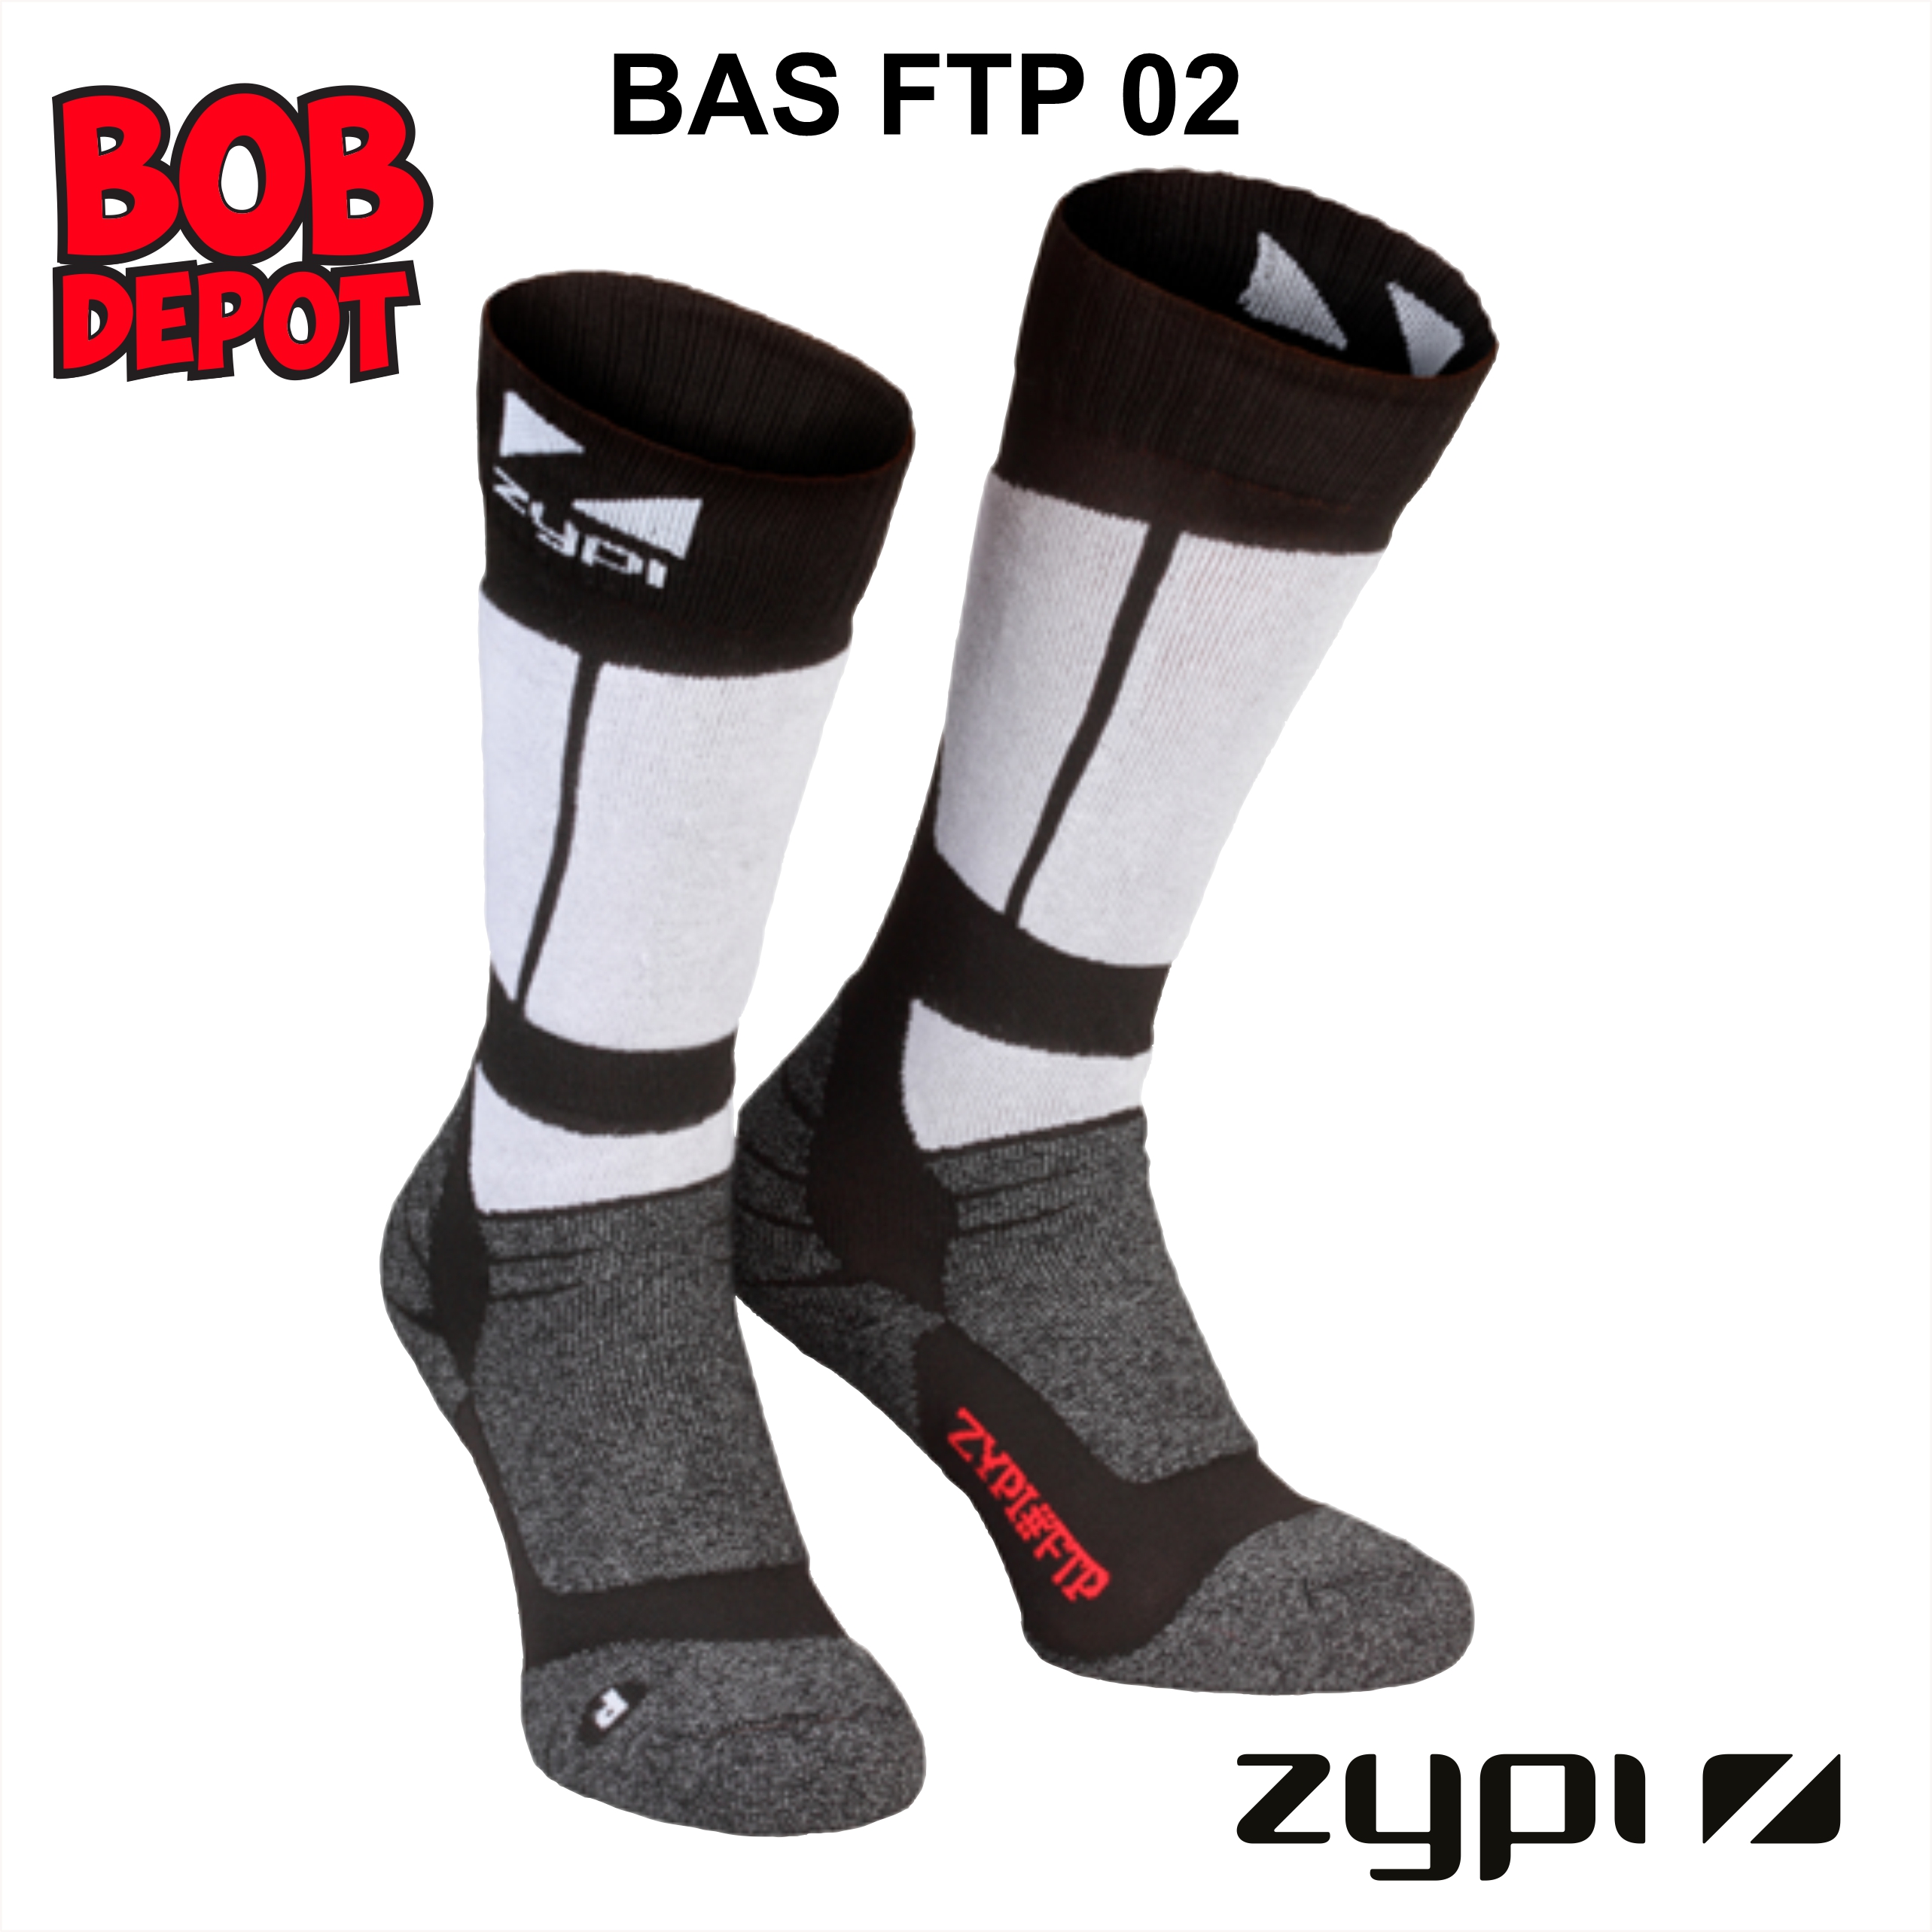 Bas/Chausettes SPORT FTP02 - Long